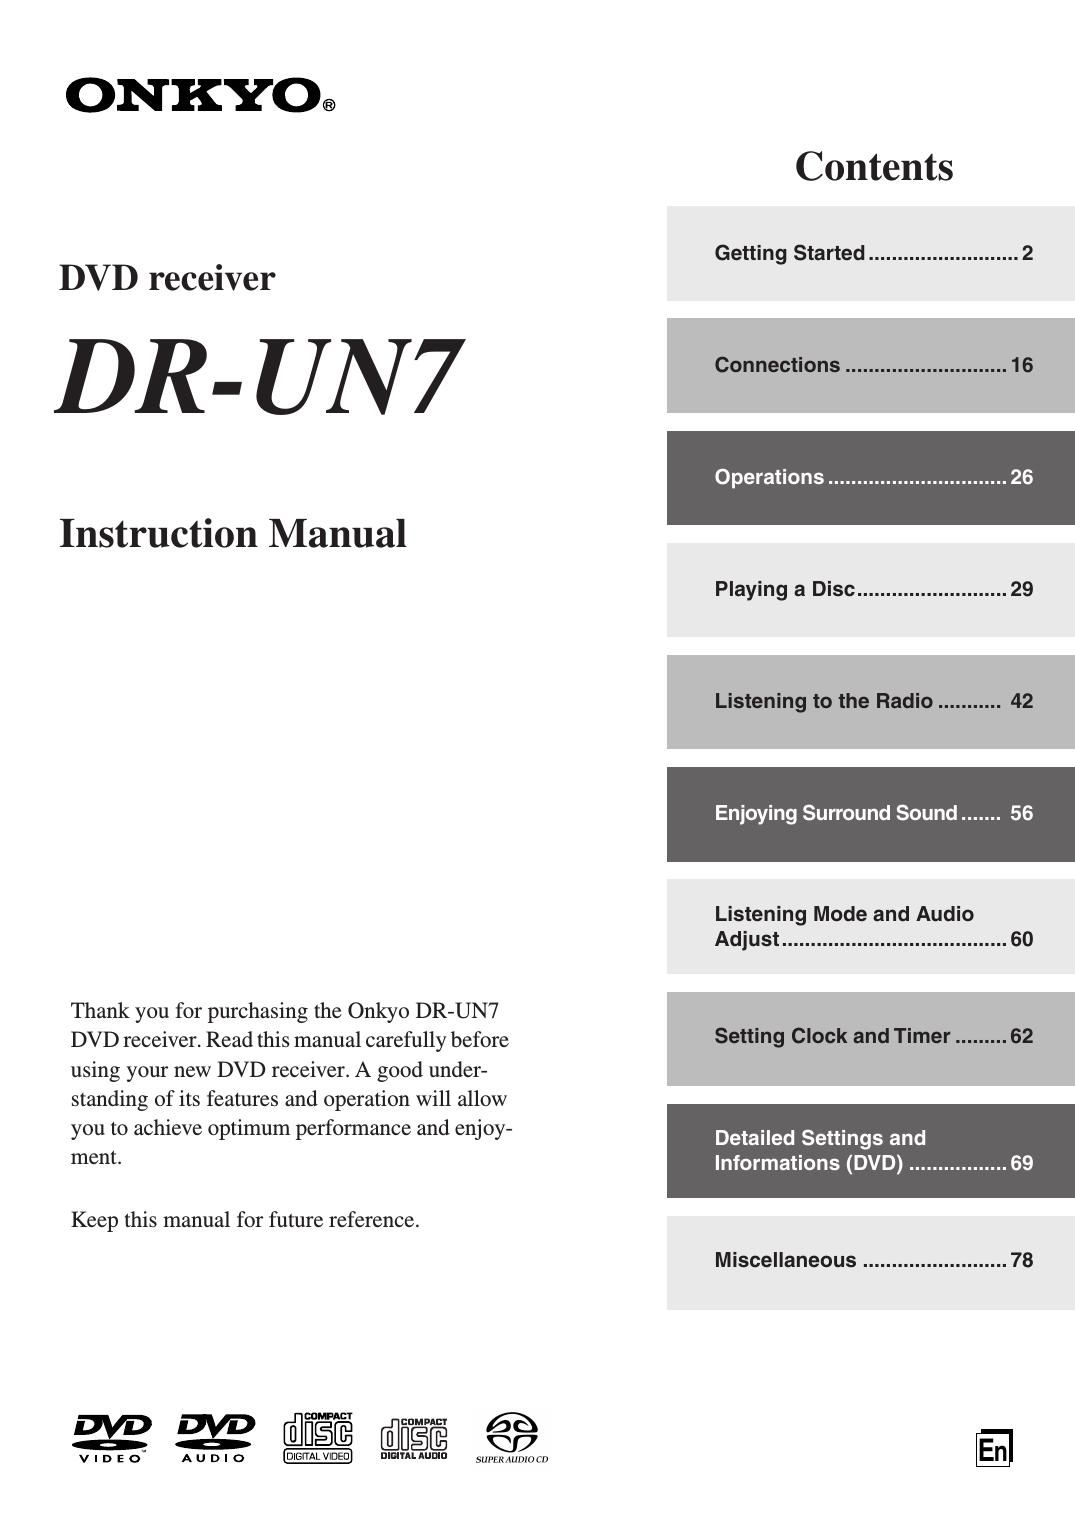 Onkyo DRUN 7 Owners Manual